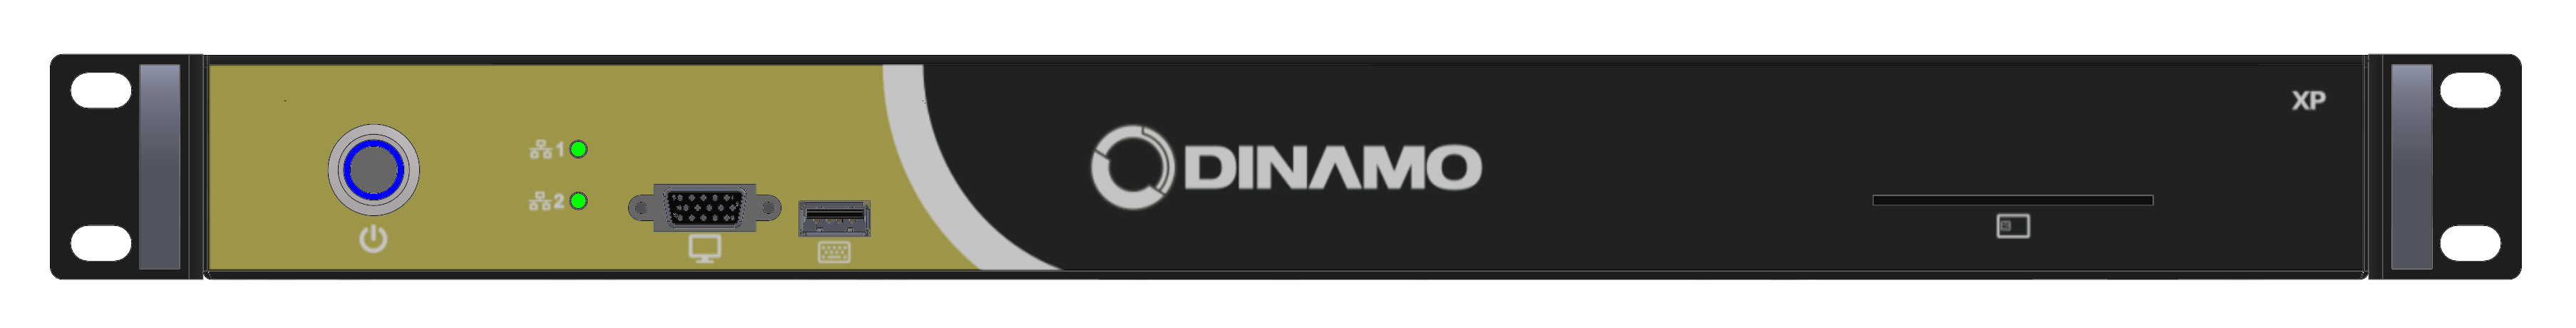 Dinamo XP